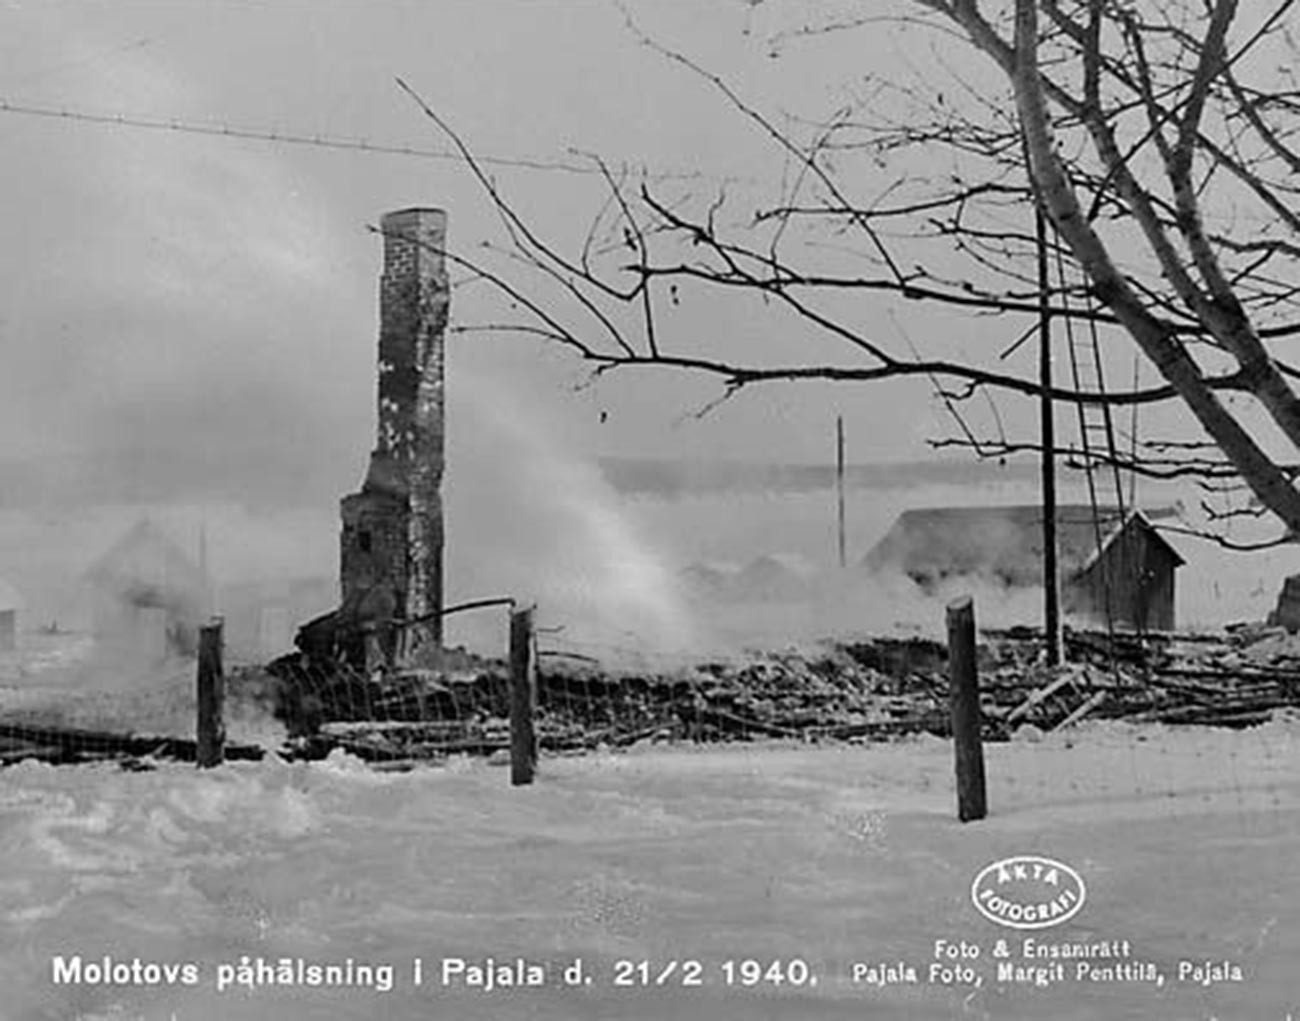 Pajala after the Soviet bombing raid.